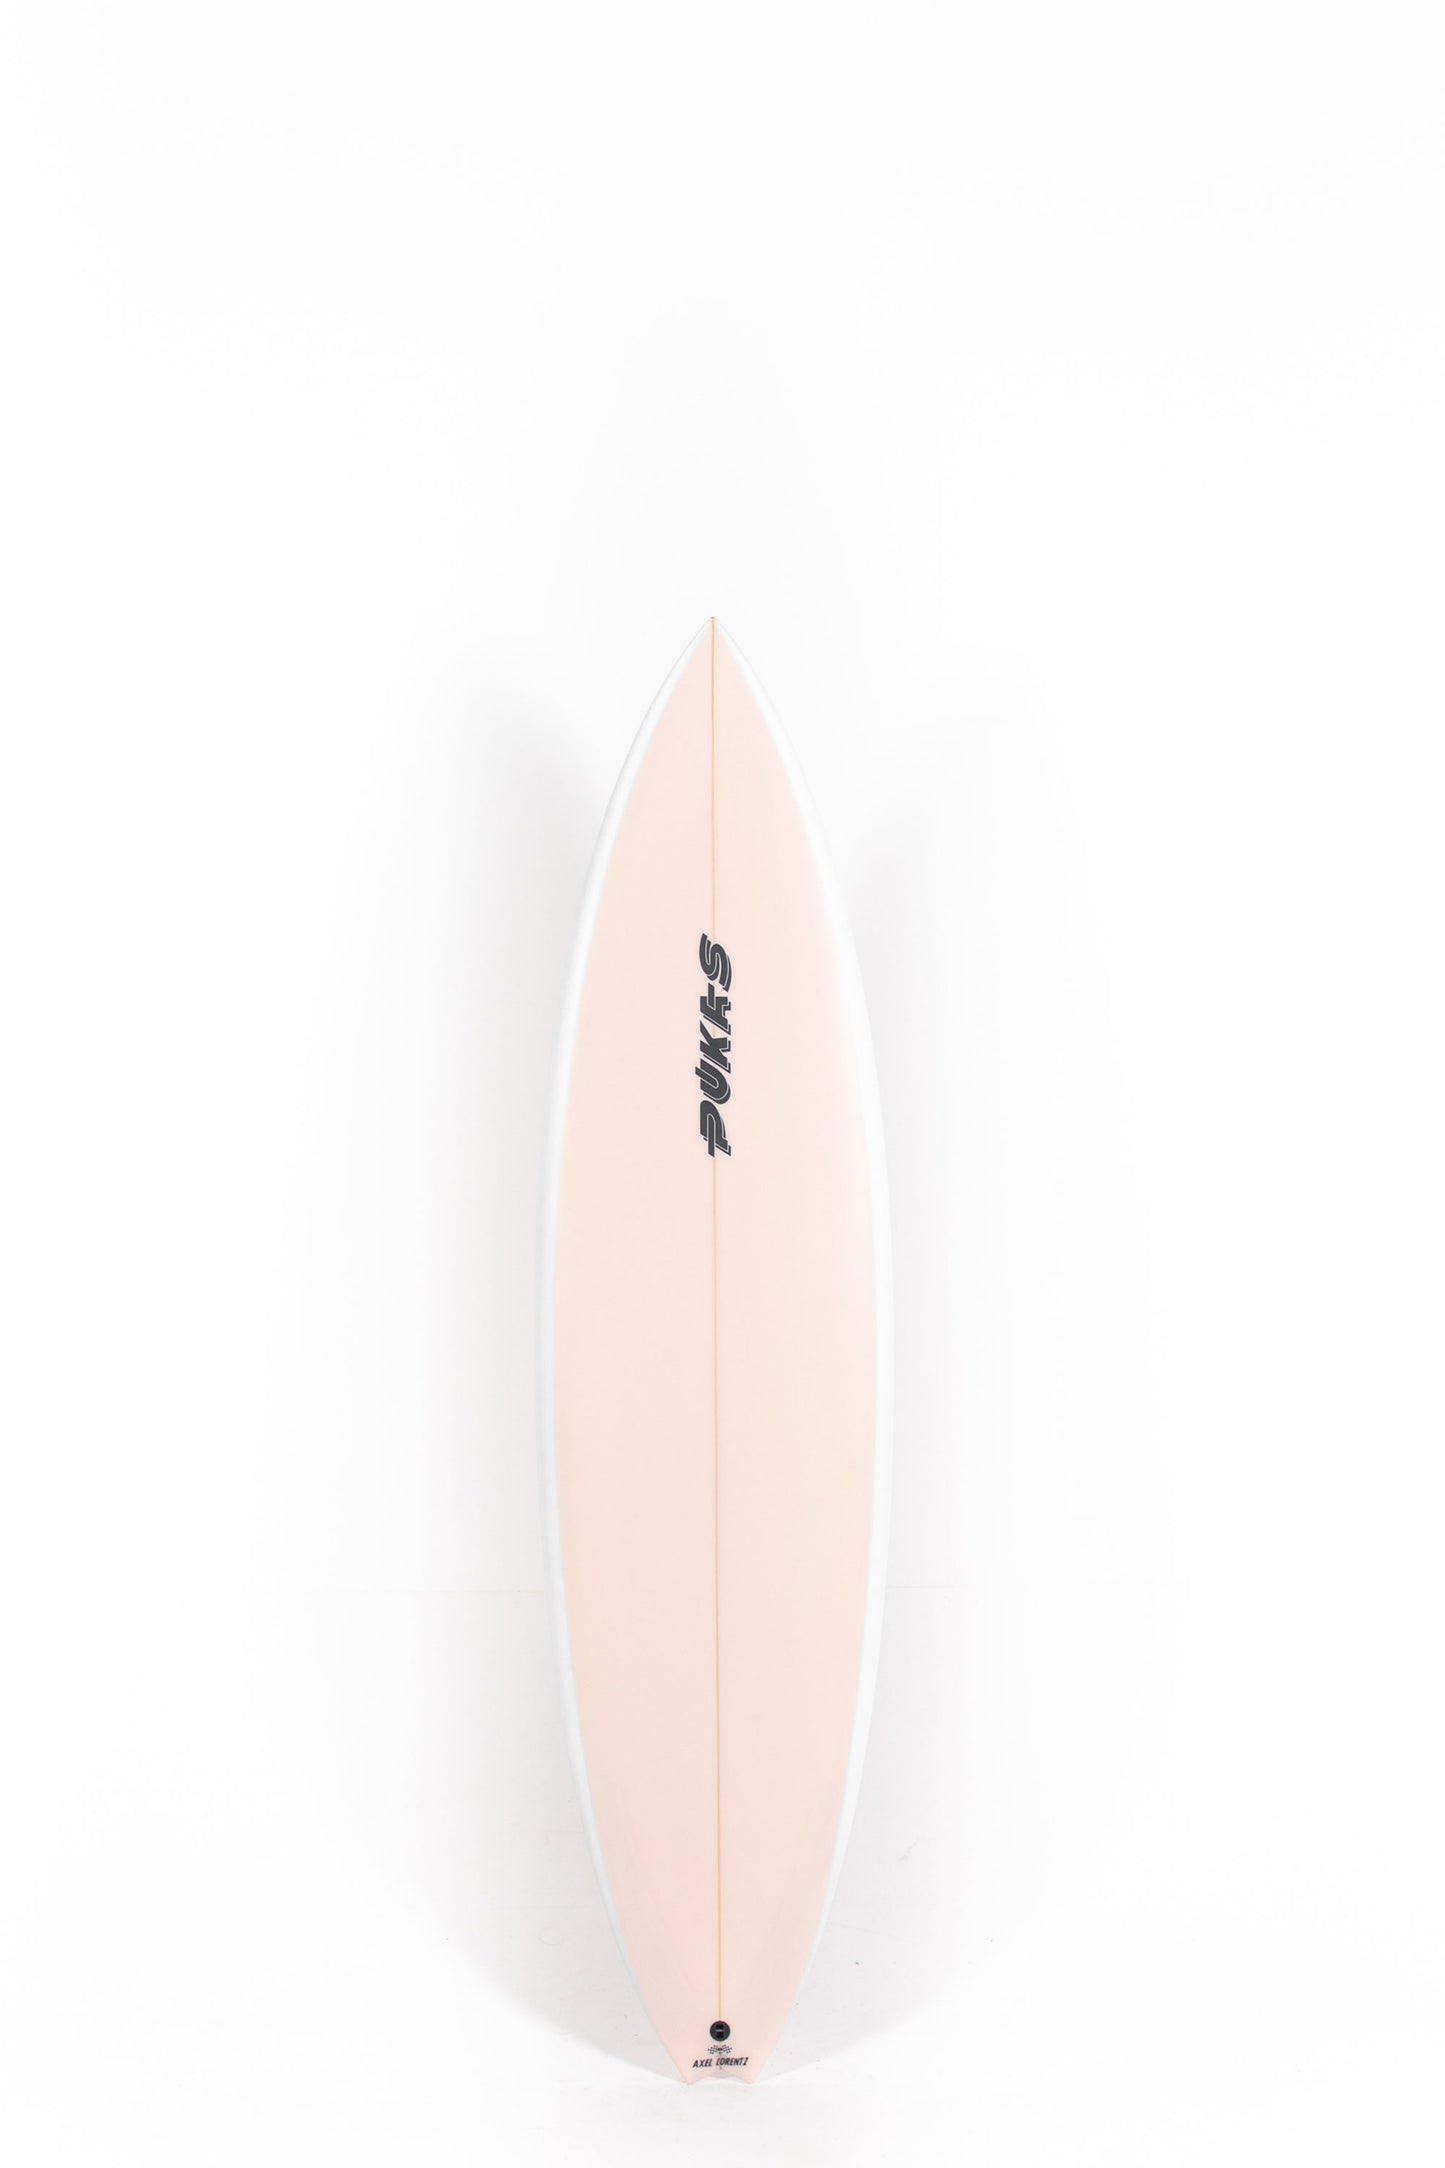 Pukas-Surf-Shop-Pukas-Surfboards-Baby-Swallow-Axel-Lorentz-6_4